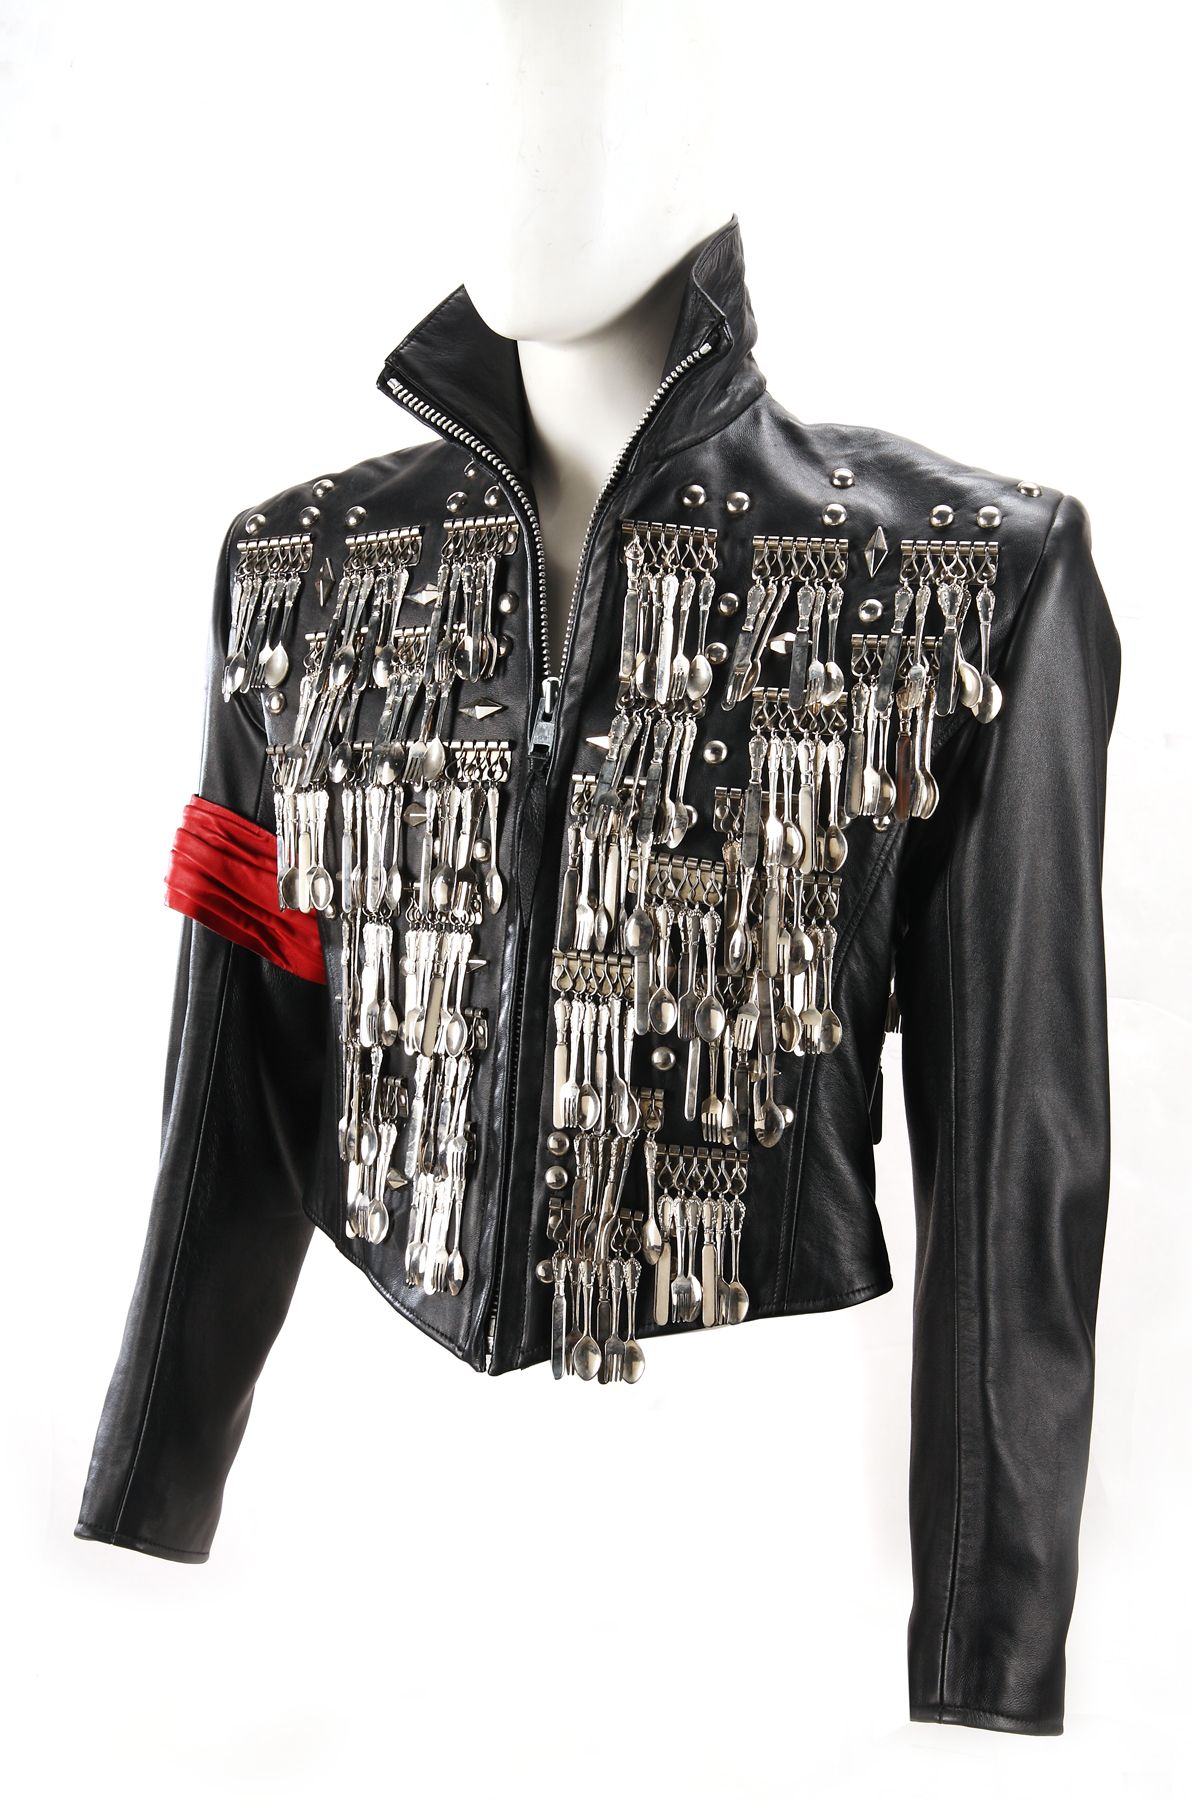 Michael Jackson’s ‘dinner jacket’ by Michael Lee Bush Date unknown, Courtesy of John Branca. Image © Julien’s Auctions / Summer Evans